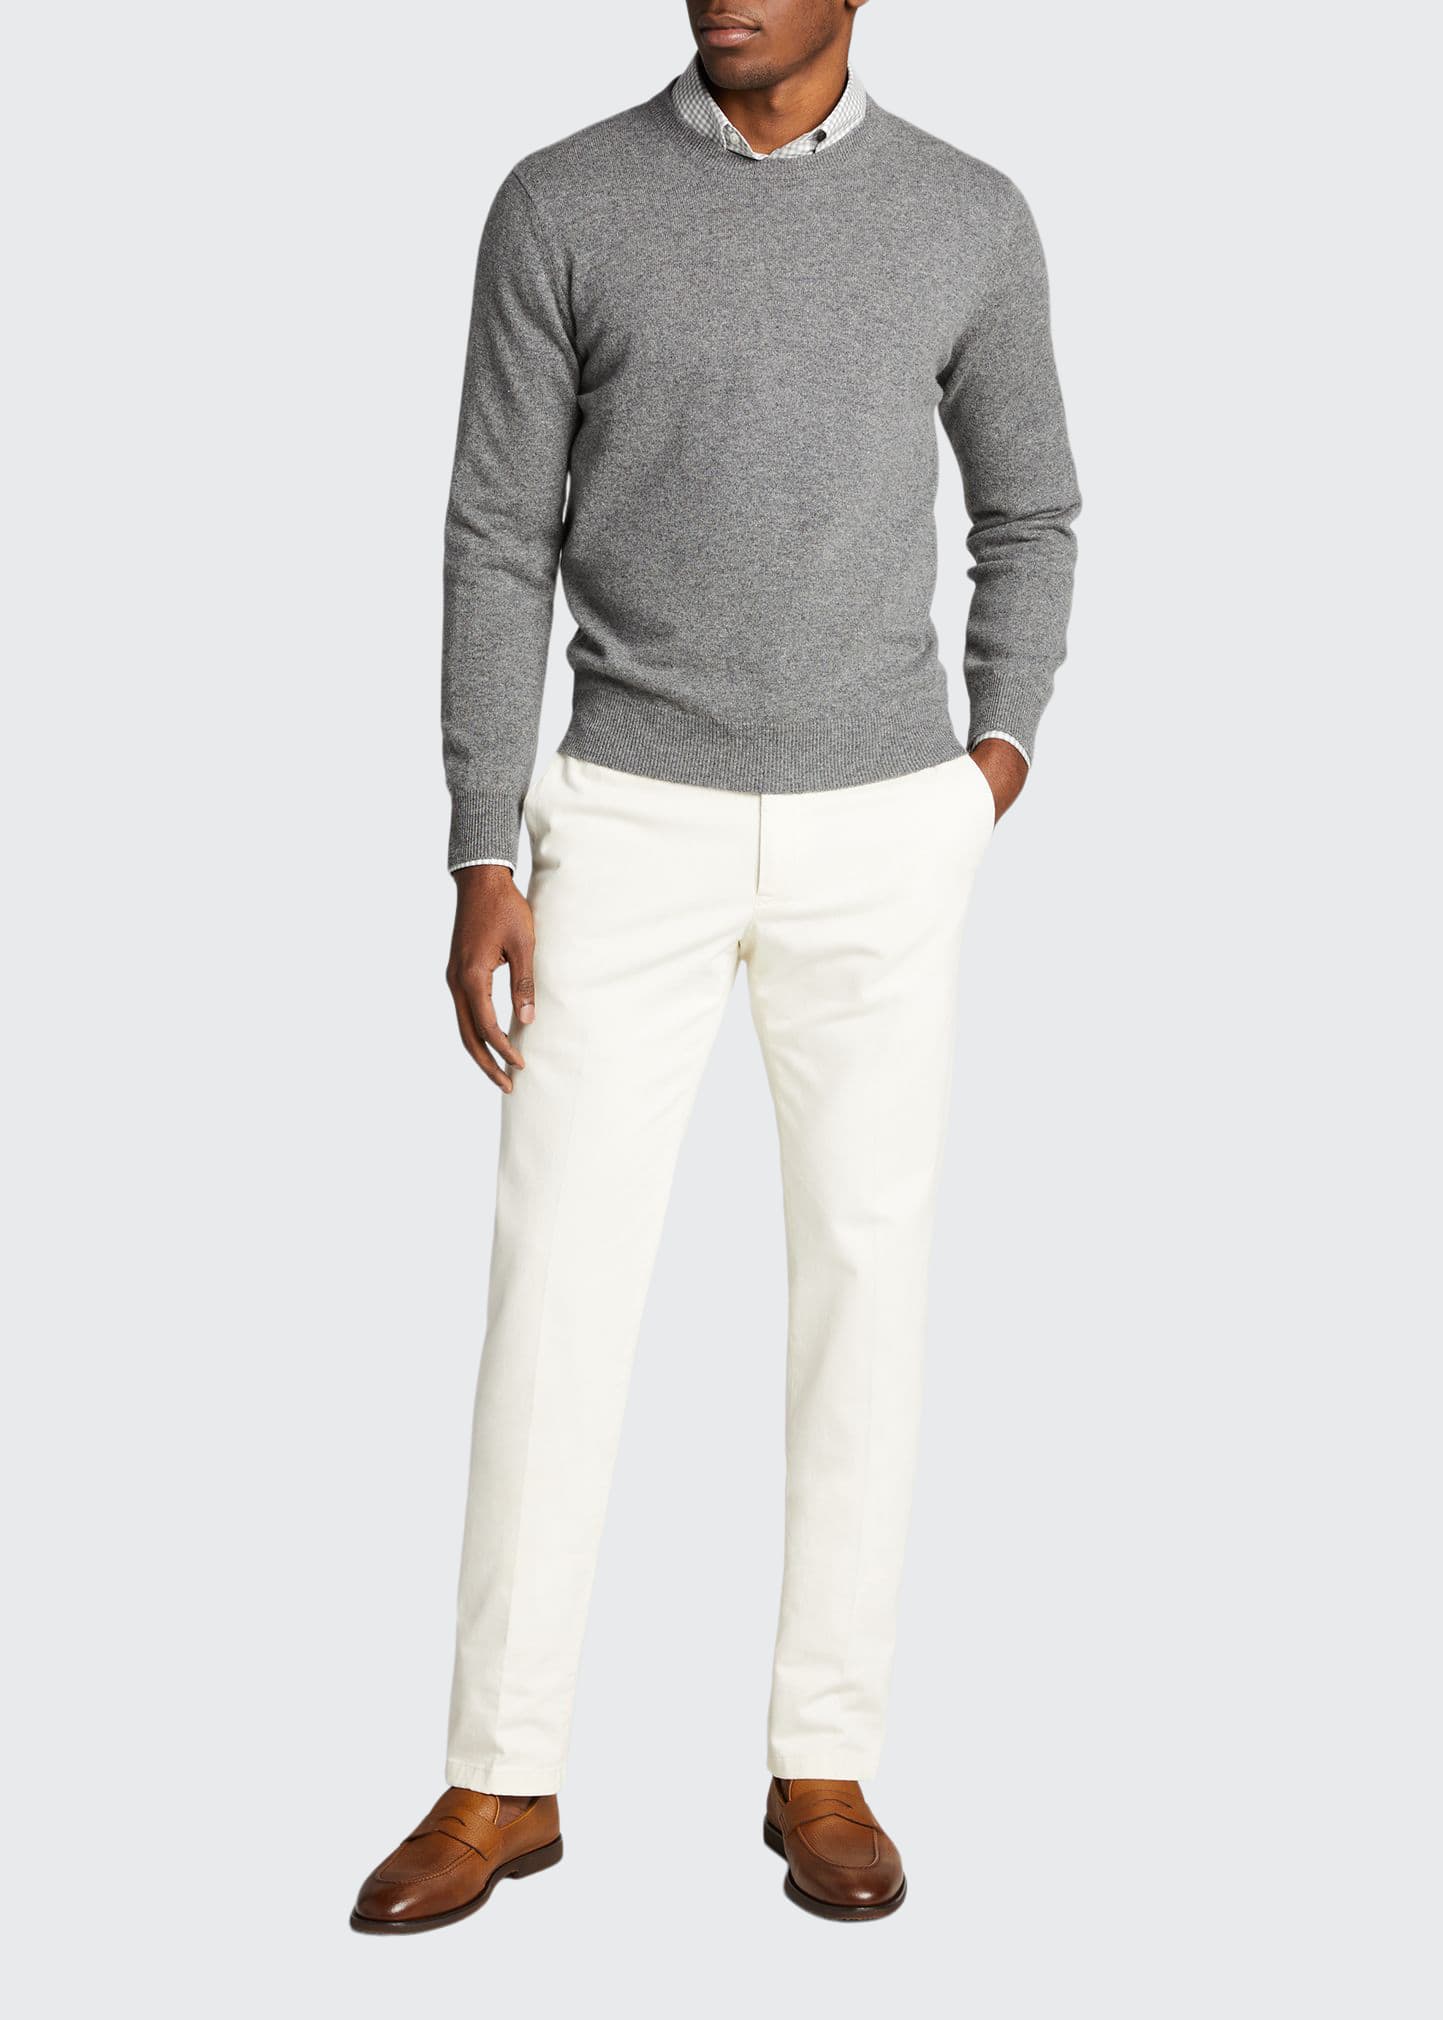 Bergdorf Goodman Men's Solid Cashmere Crewneck Sweater